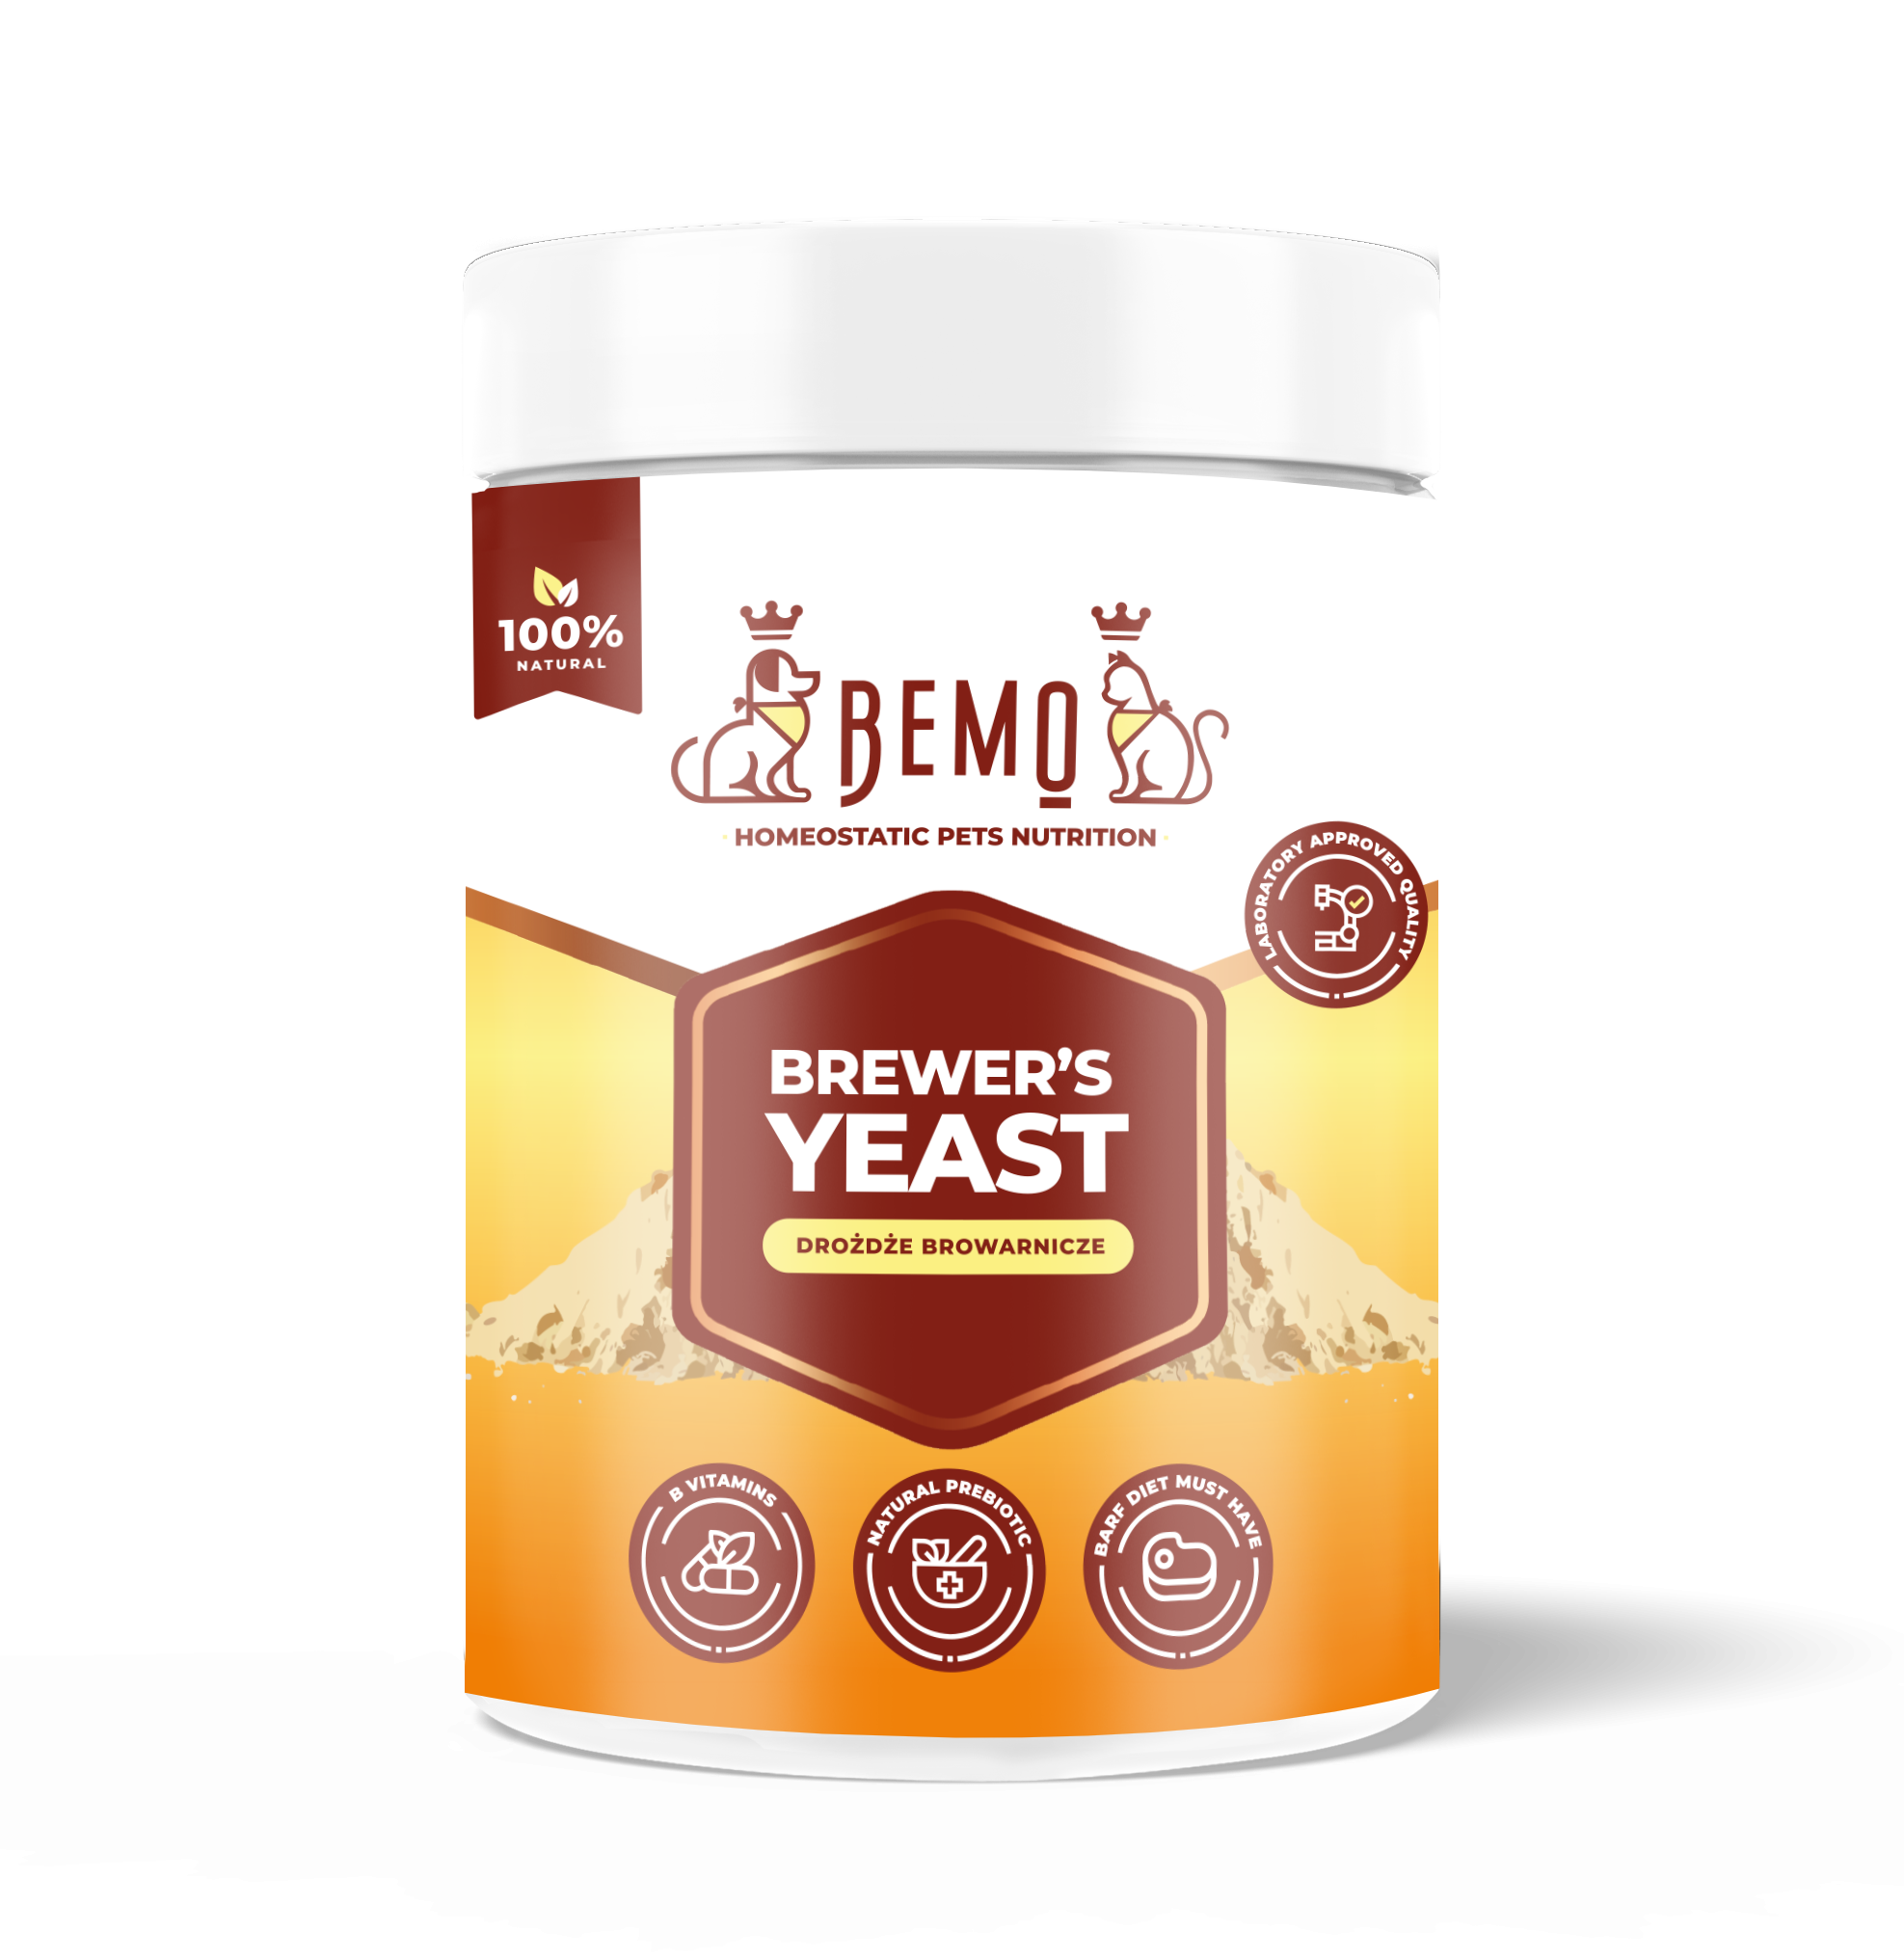 Bemo Brewer's Yeast - drożdże browarnicze dla psa i kota